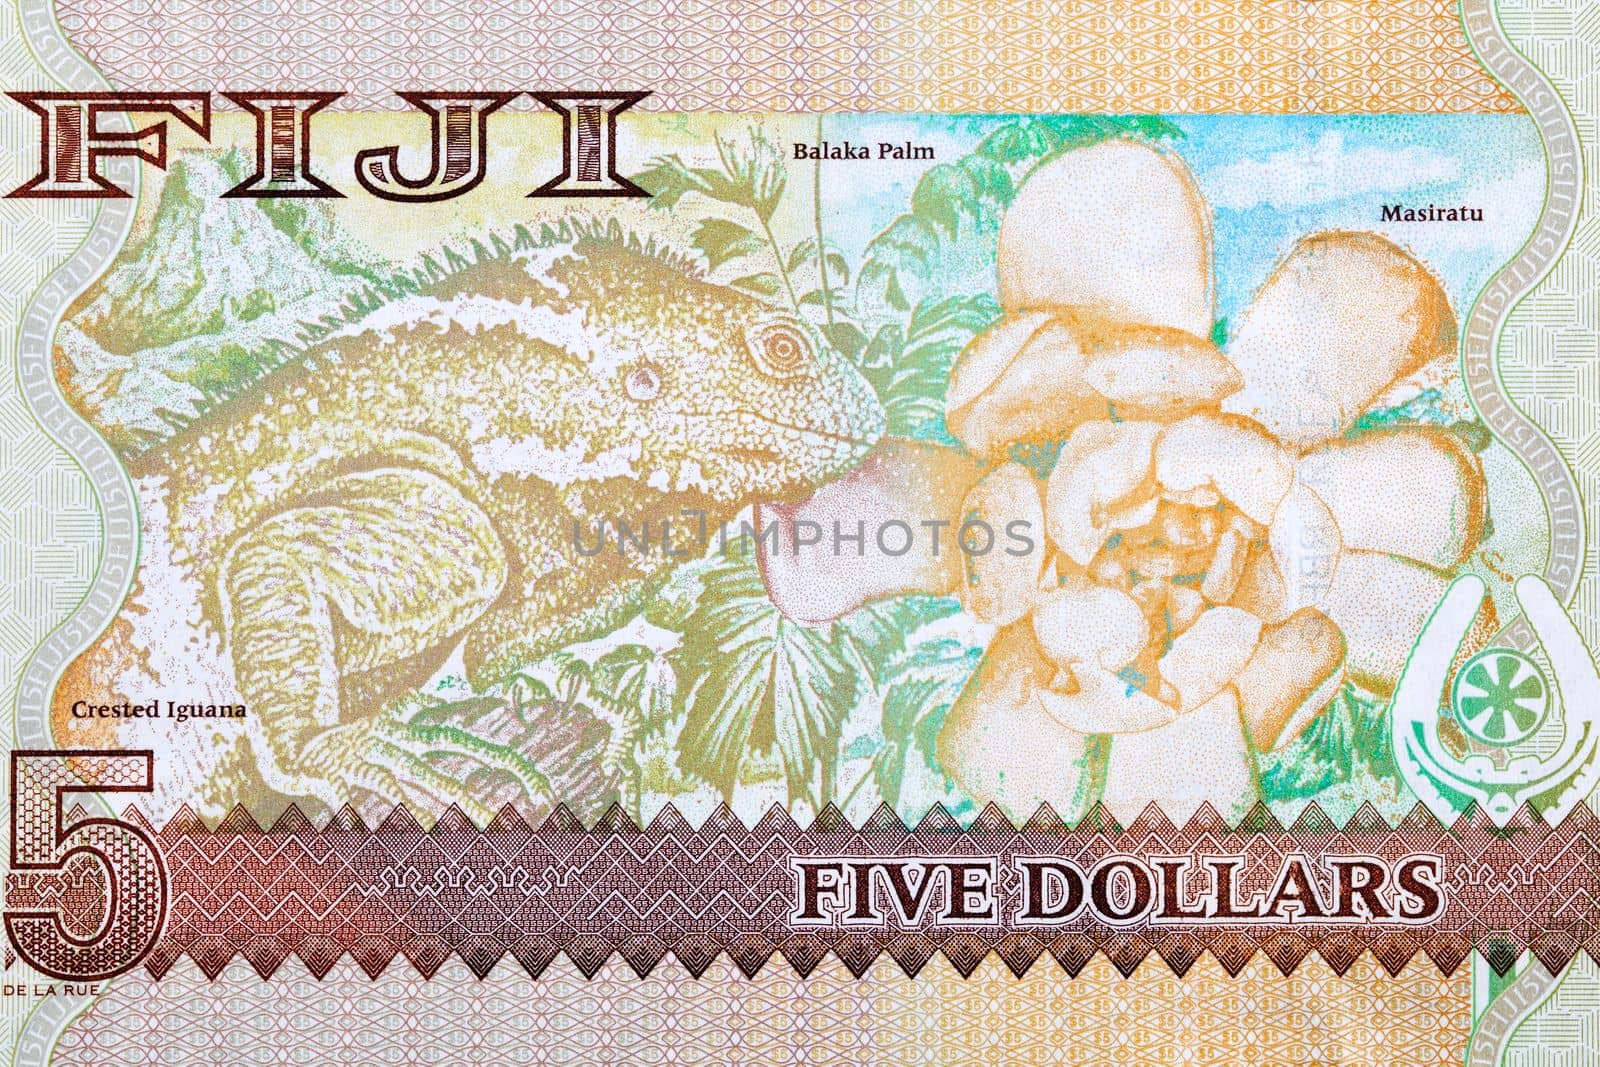 Iguana and Balaka palm from Fijian money by johan10